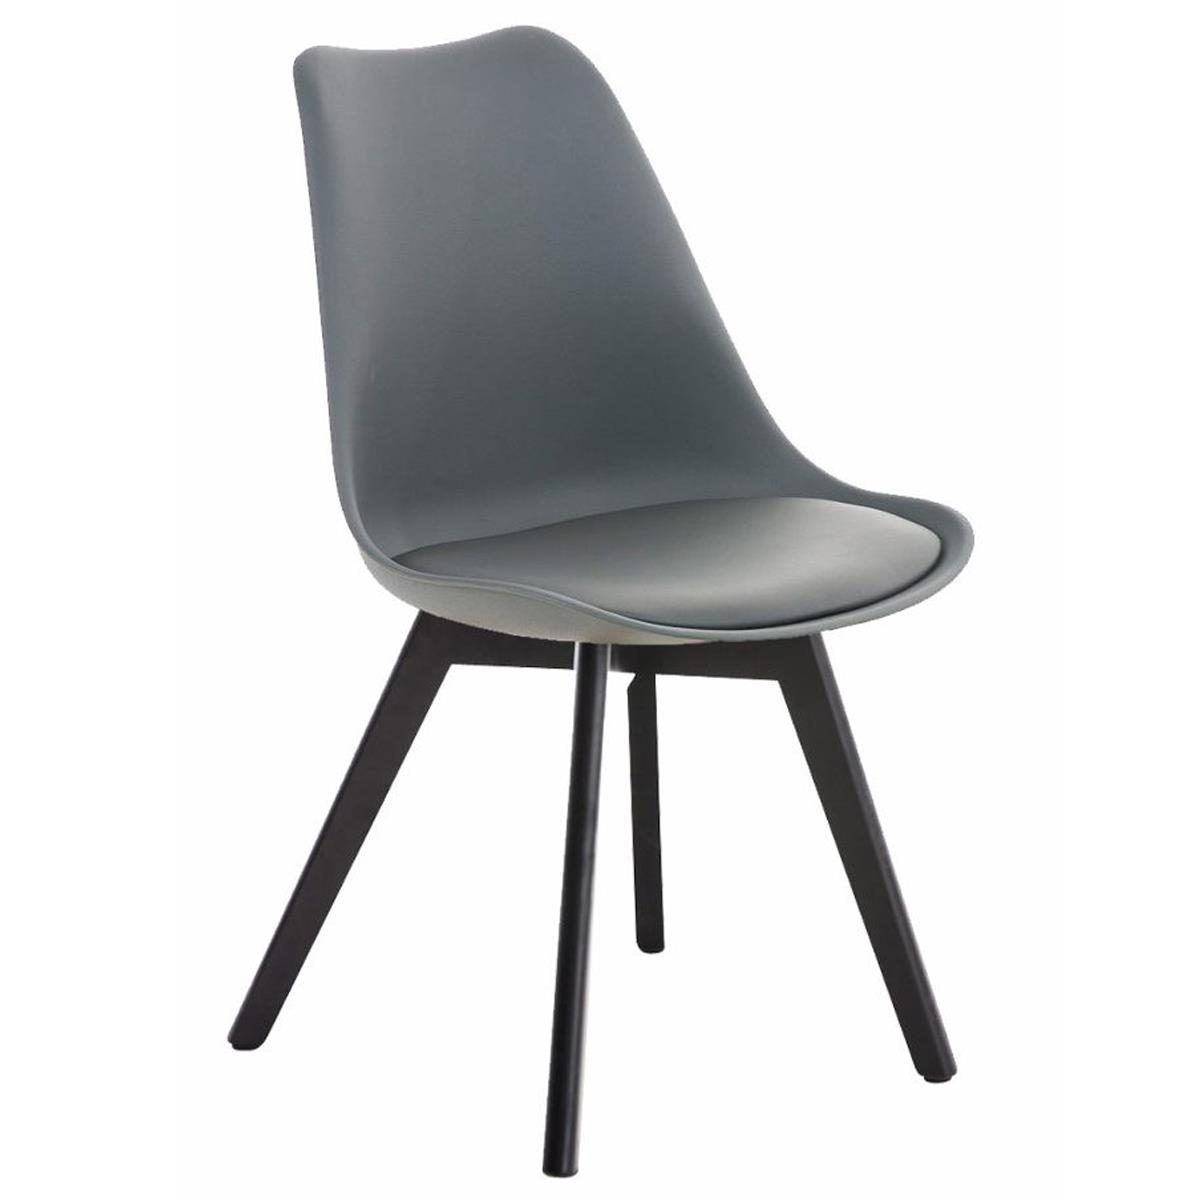 Designer Stuhl/ Besucherstuhl BOSPORUS, dunkle Stuhlbeine, Kunststoffsitzschale, Lederbezug, Farbe Grau